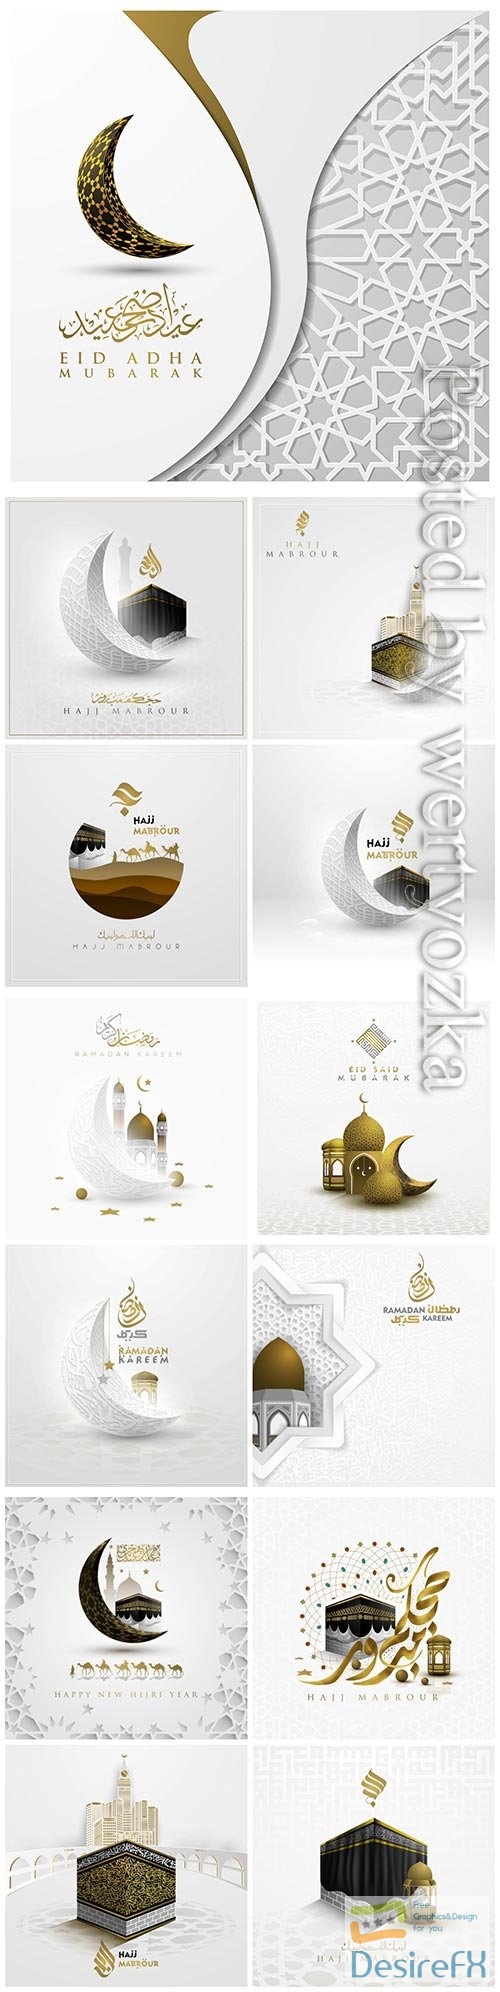 Hajj mabrour greeting islamic illustration background design with beautiful kaaba lentern